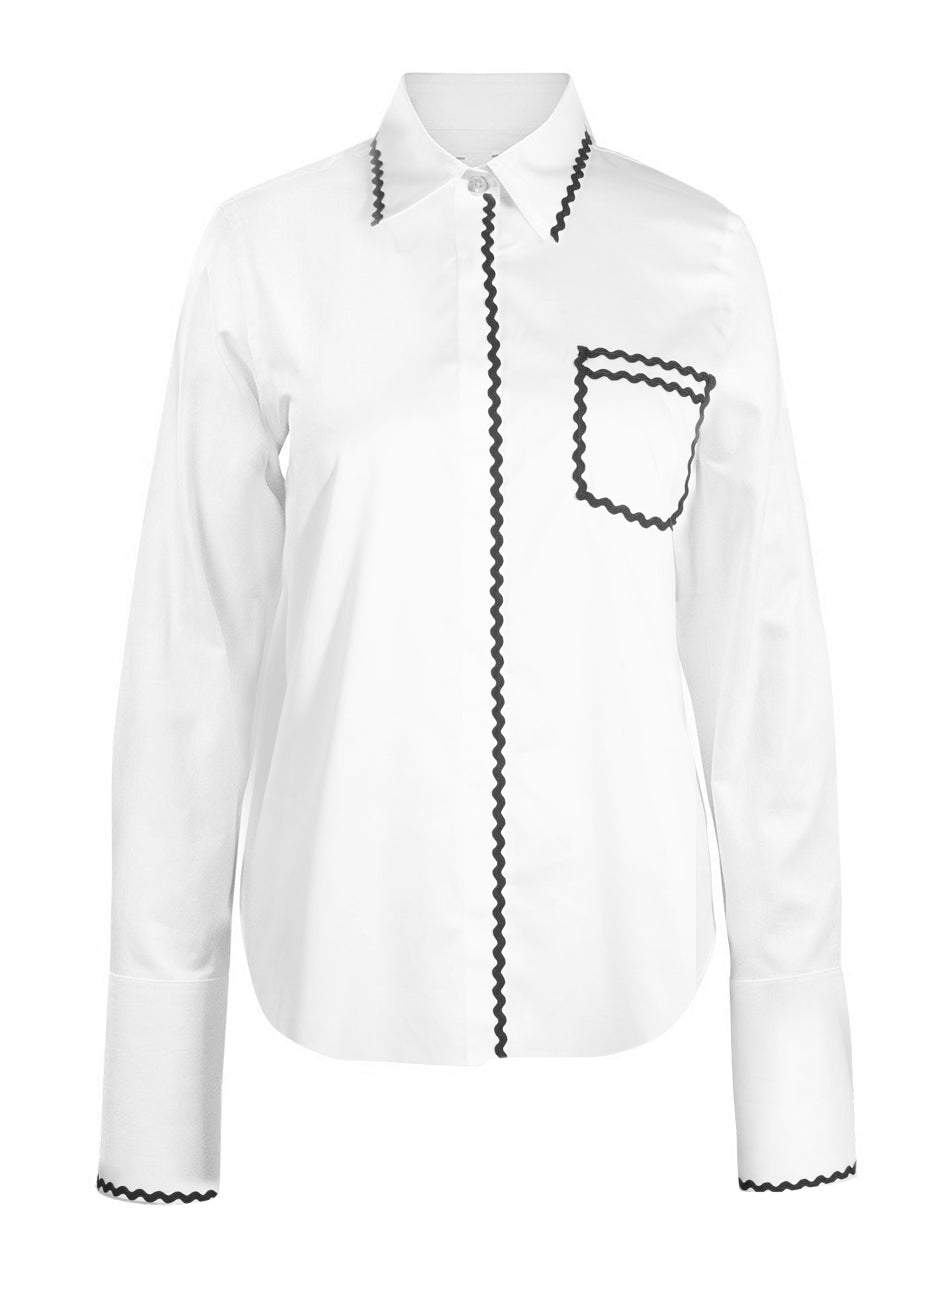 The Newport Ric Rac Shirt - White/Black